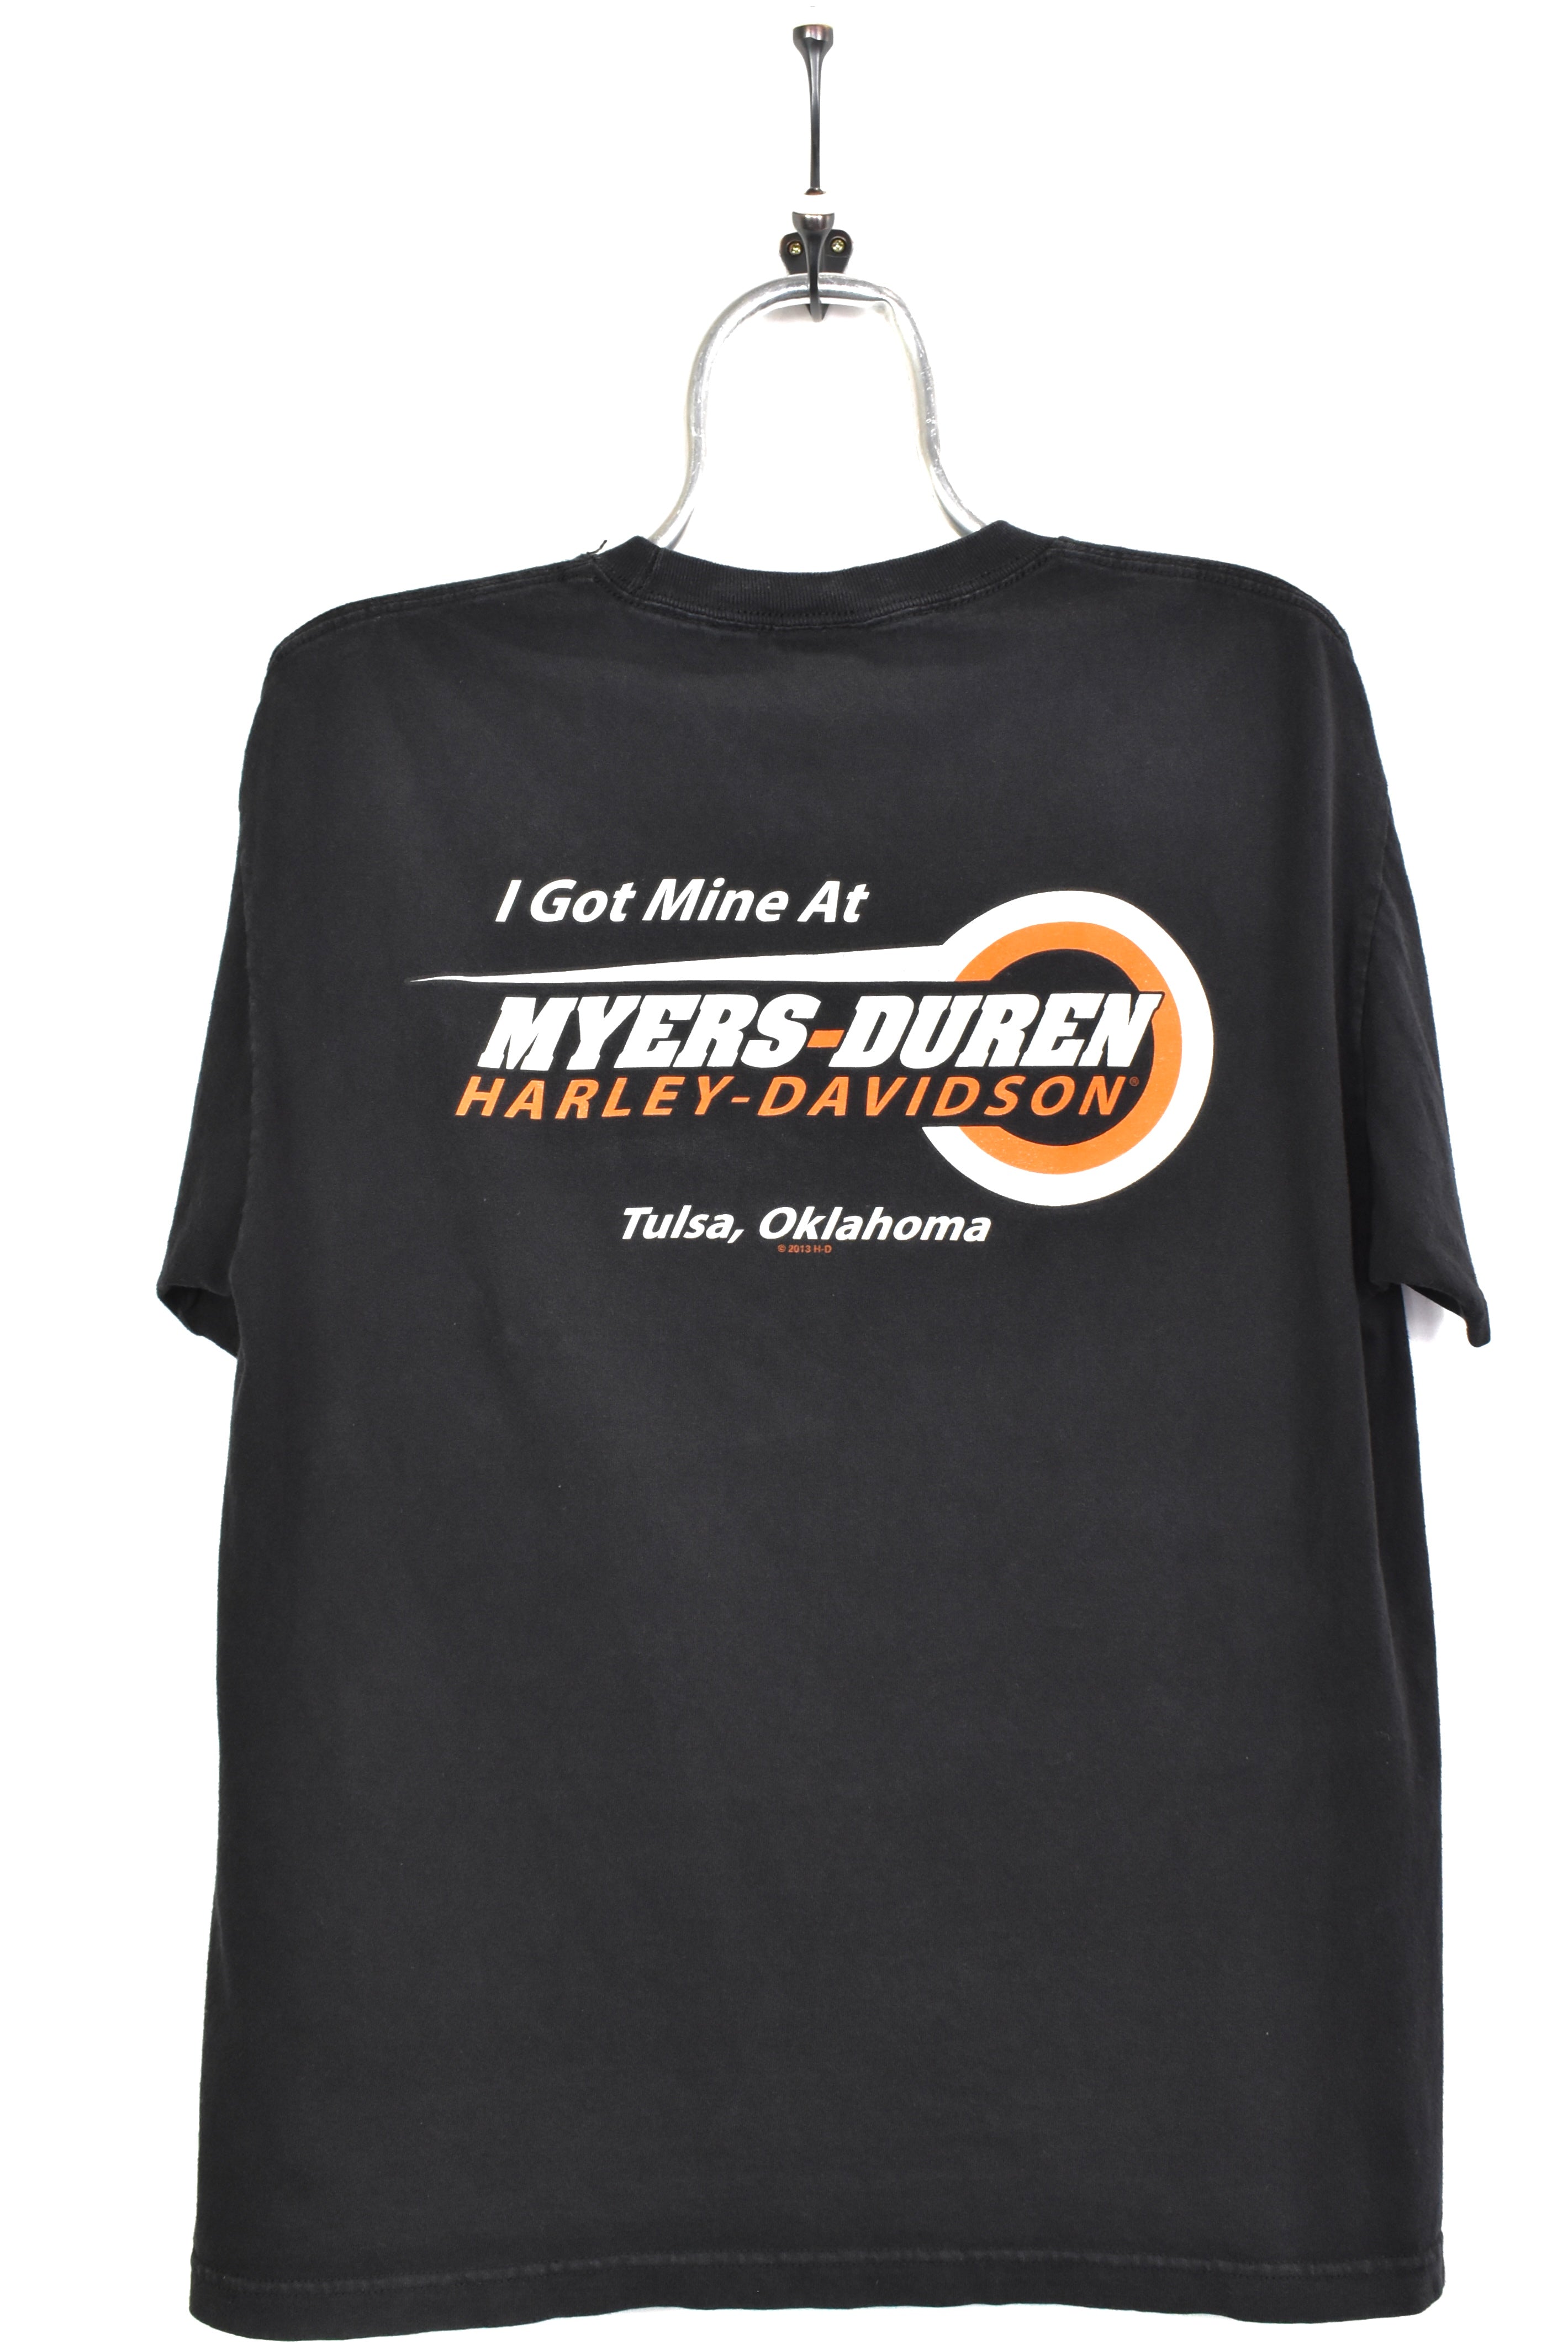 Modern Harley Davidson shirt, 2015 biker graphic tee - medium, black HARLEY DAVIDSON